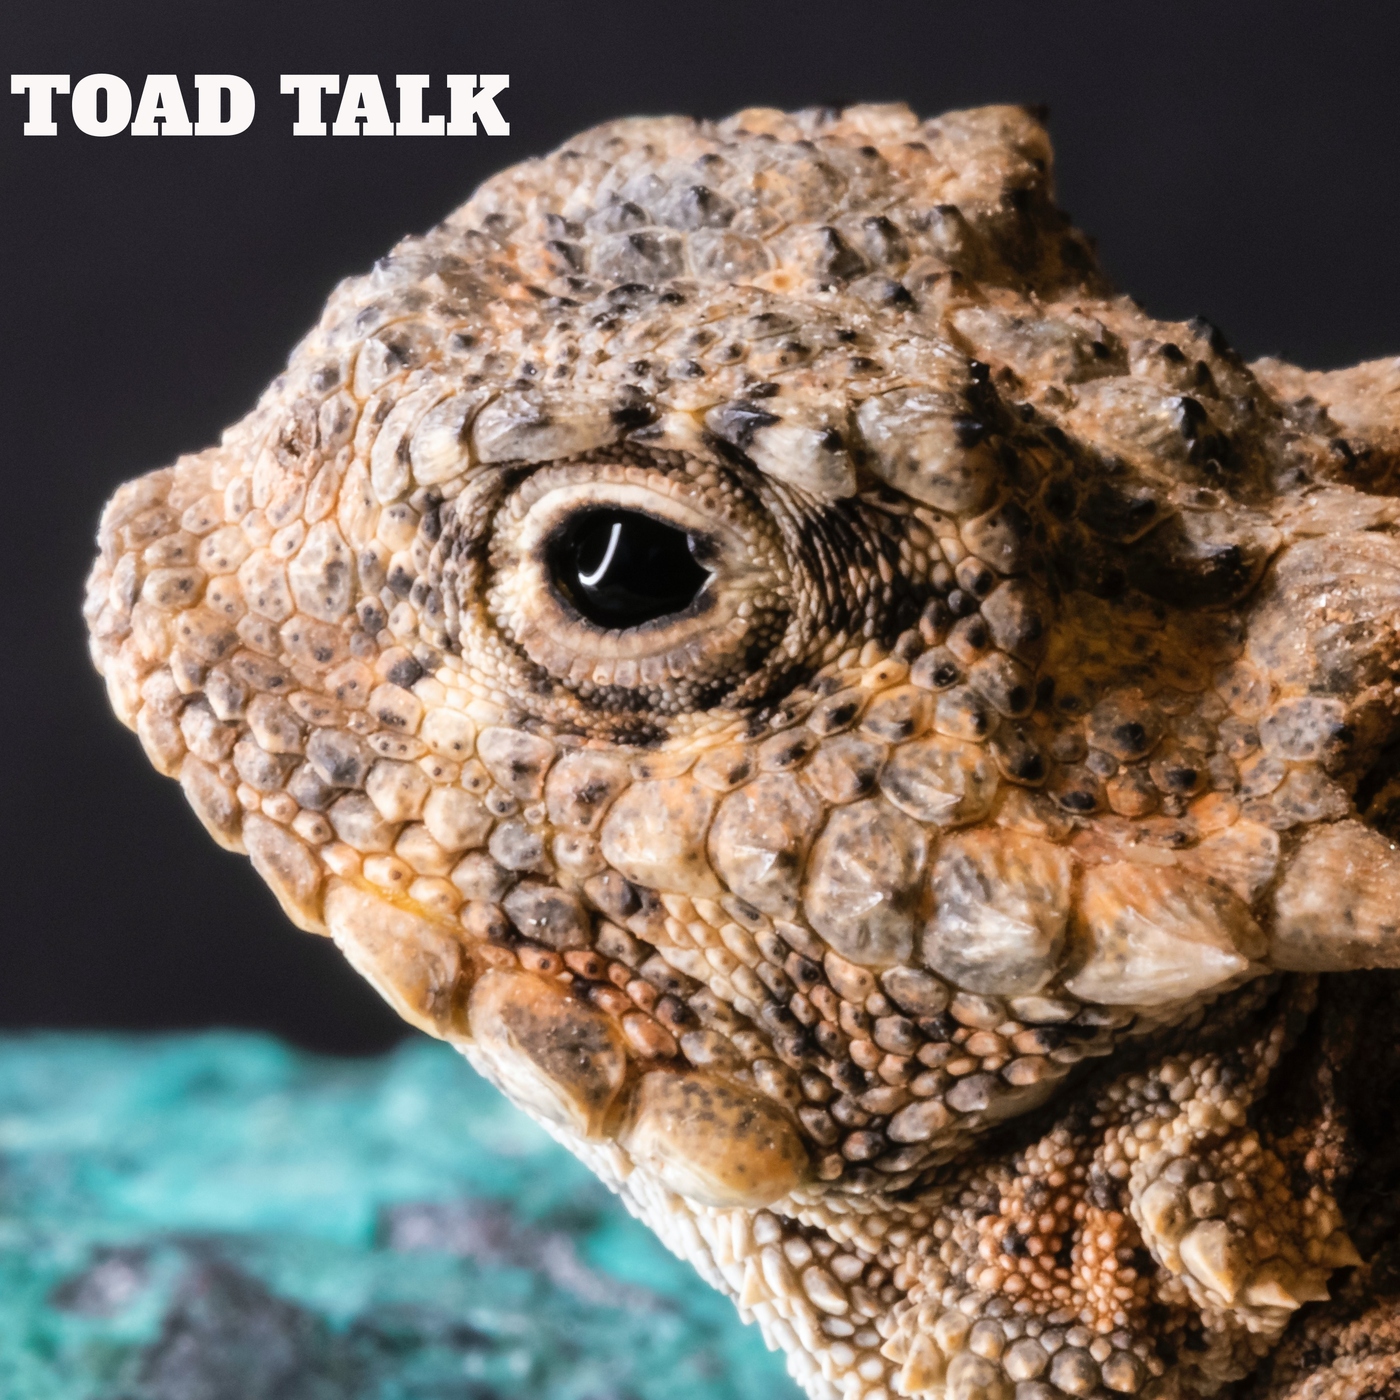 Episode 262: Toad Talk Episode 262 (feat. LaDainian Tomlinson)